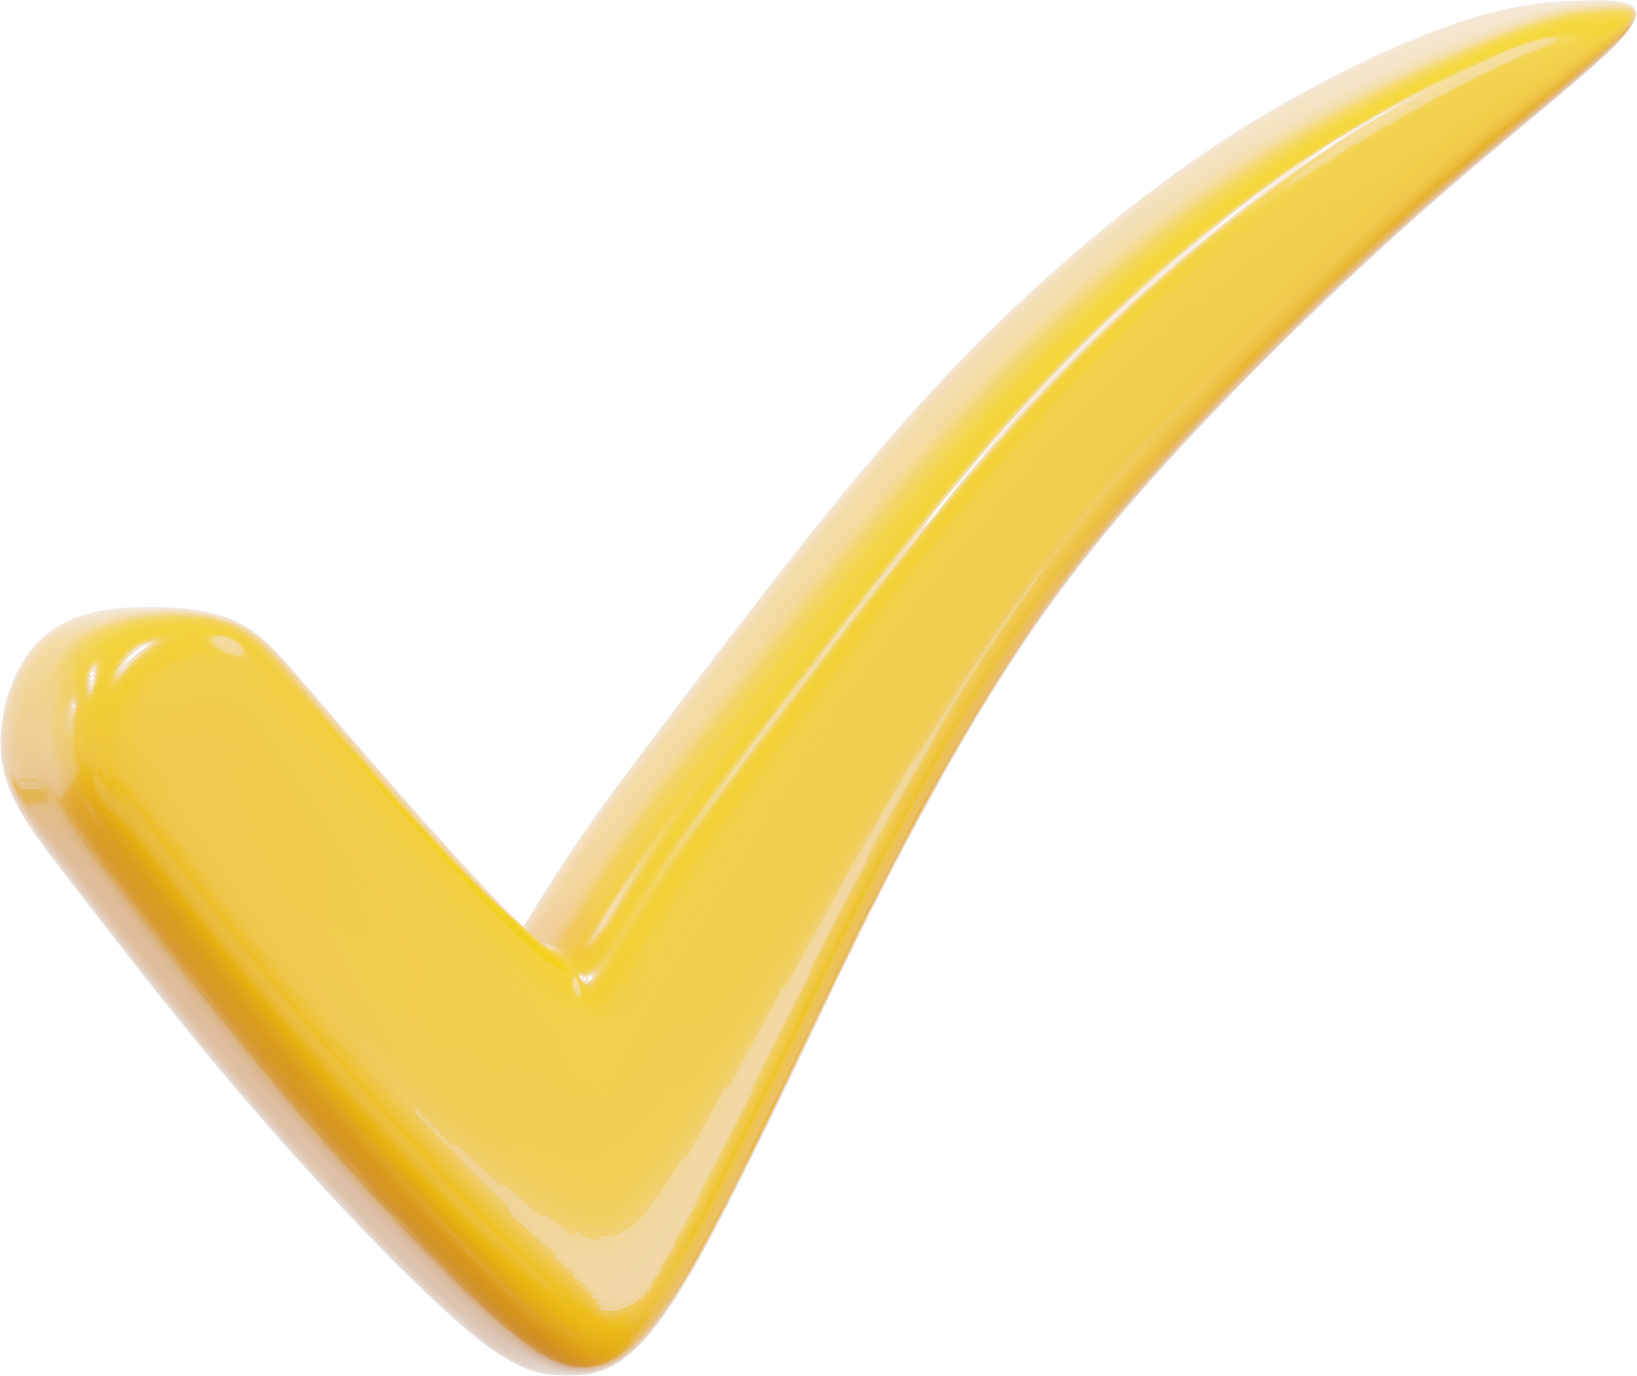 3d yellow check mark icon